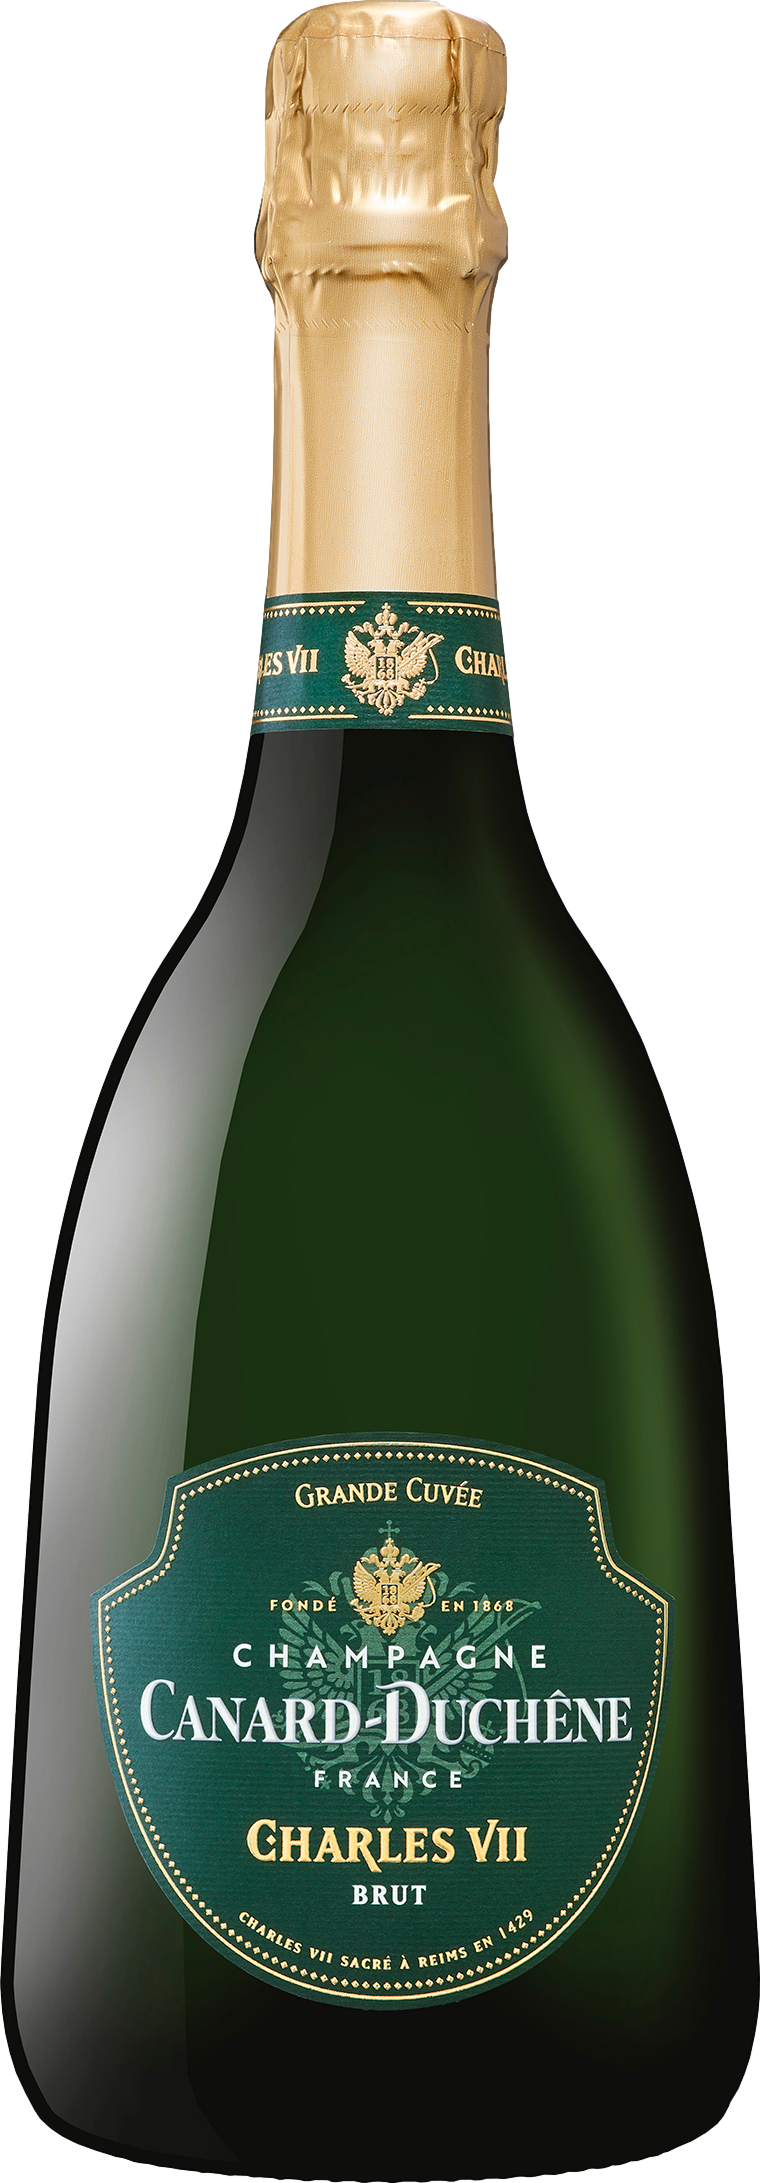 Champagne Canard-Duchene Grande Cuvee Charles VII Brut